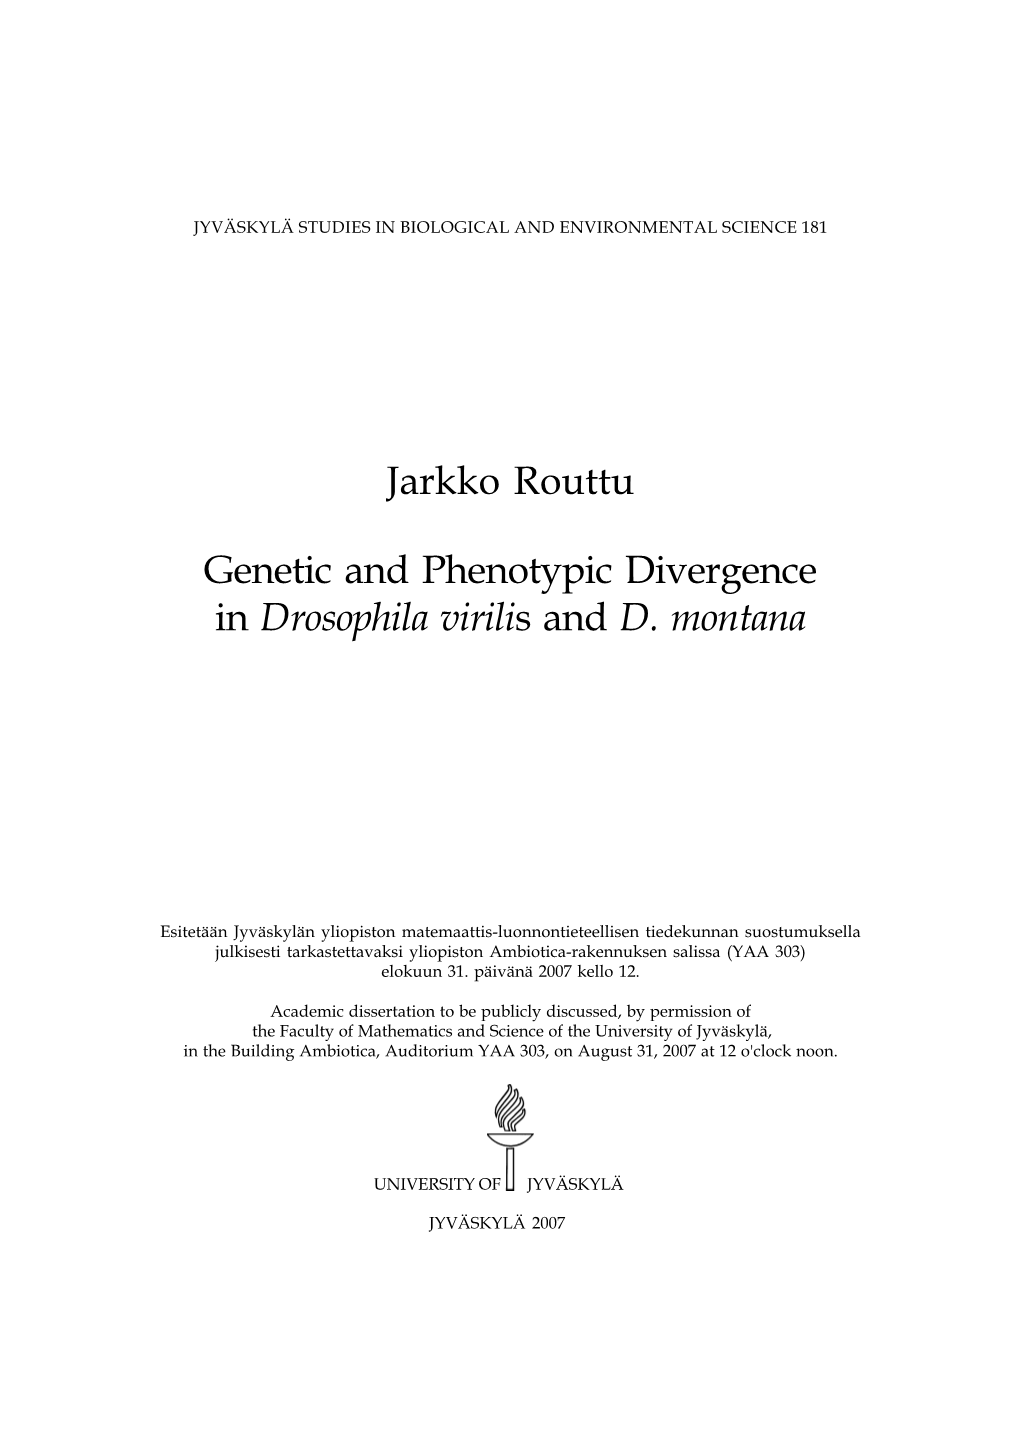 Jarkko Routtu Genetic and Phenotypic Divergence in Drosophila Virilis